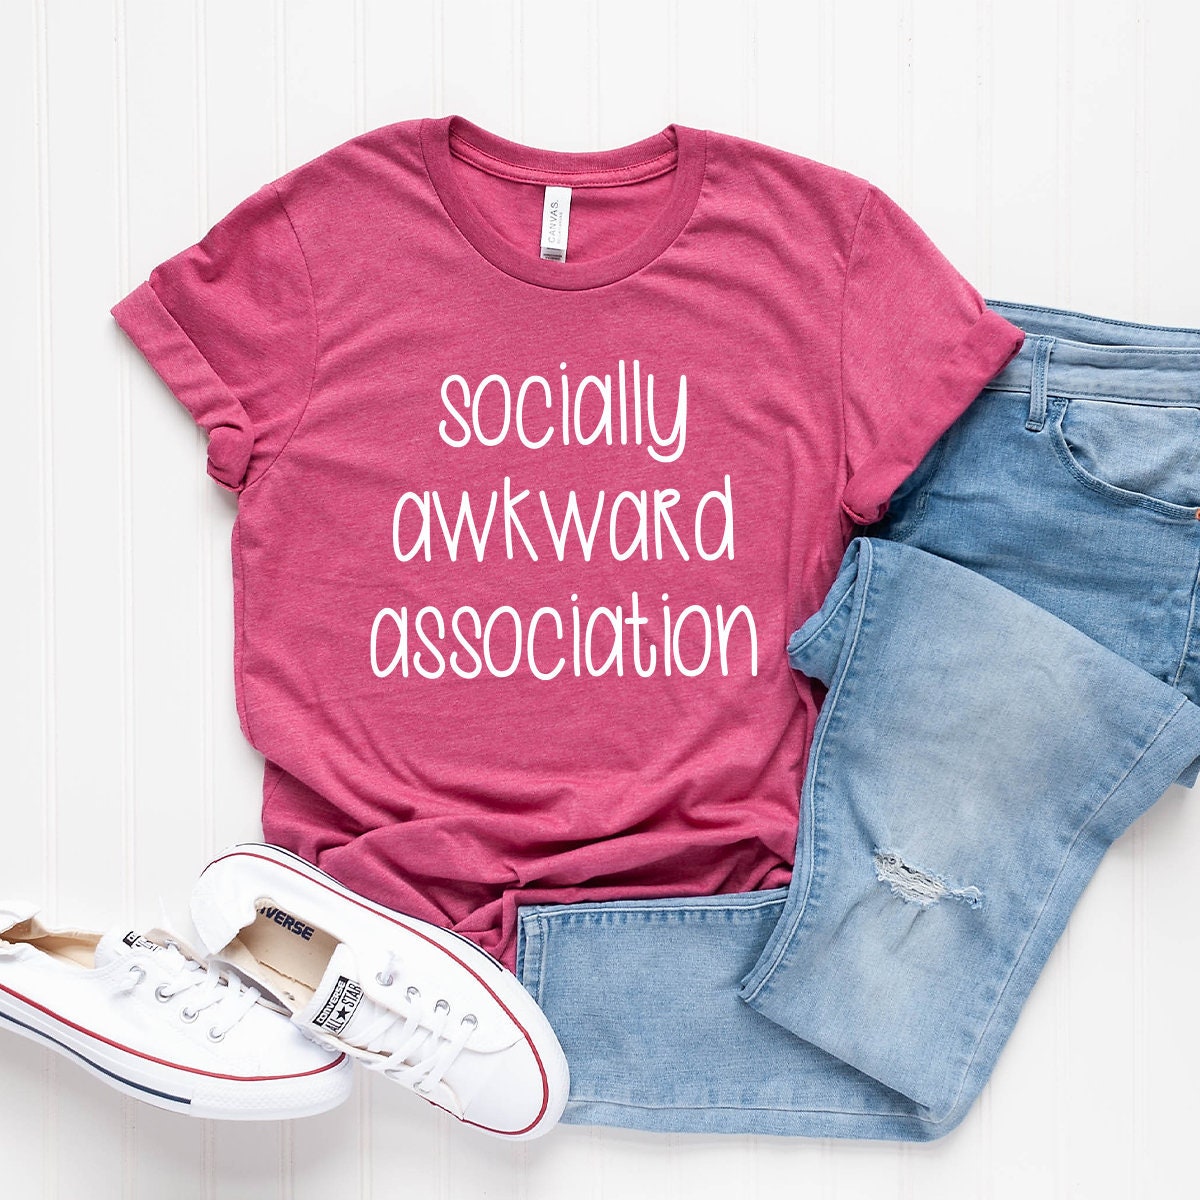 Funny Unsocials  T Shirt, Introvert Shirt, Socially Awkward Association Shirt, Stay Home Shirt, Social Anxiety Shirt, Quarantine T Shirt - Fastdeliverytees.com